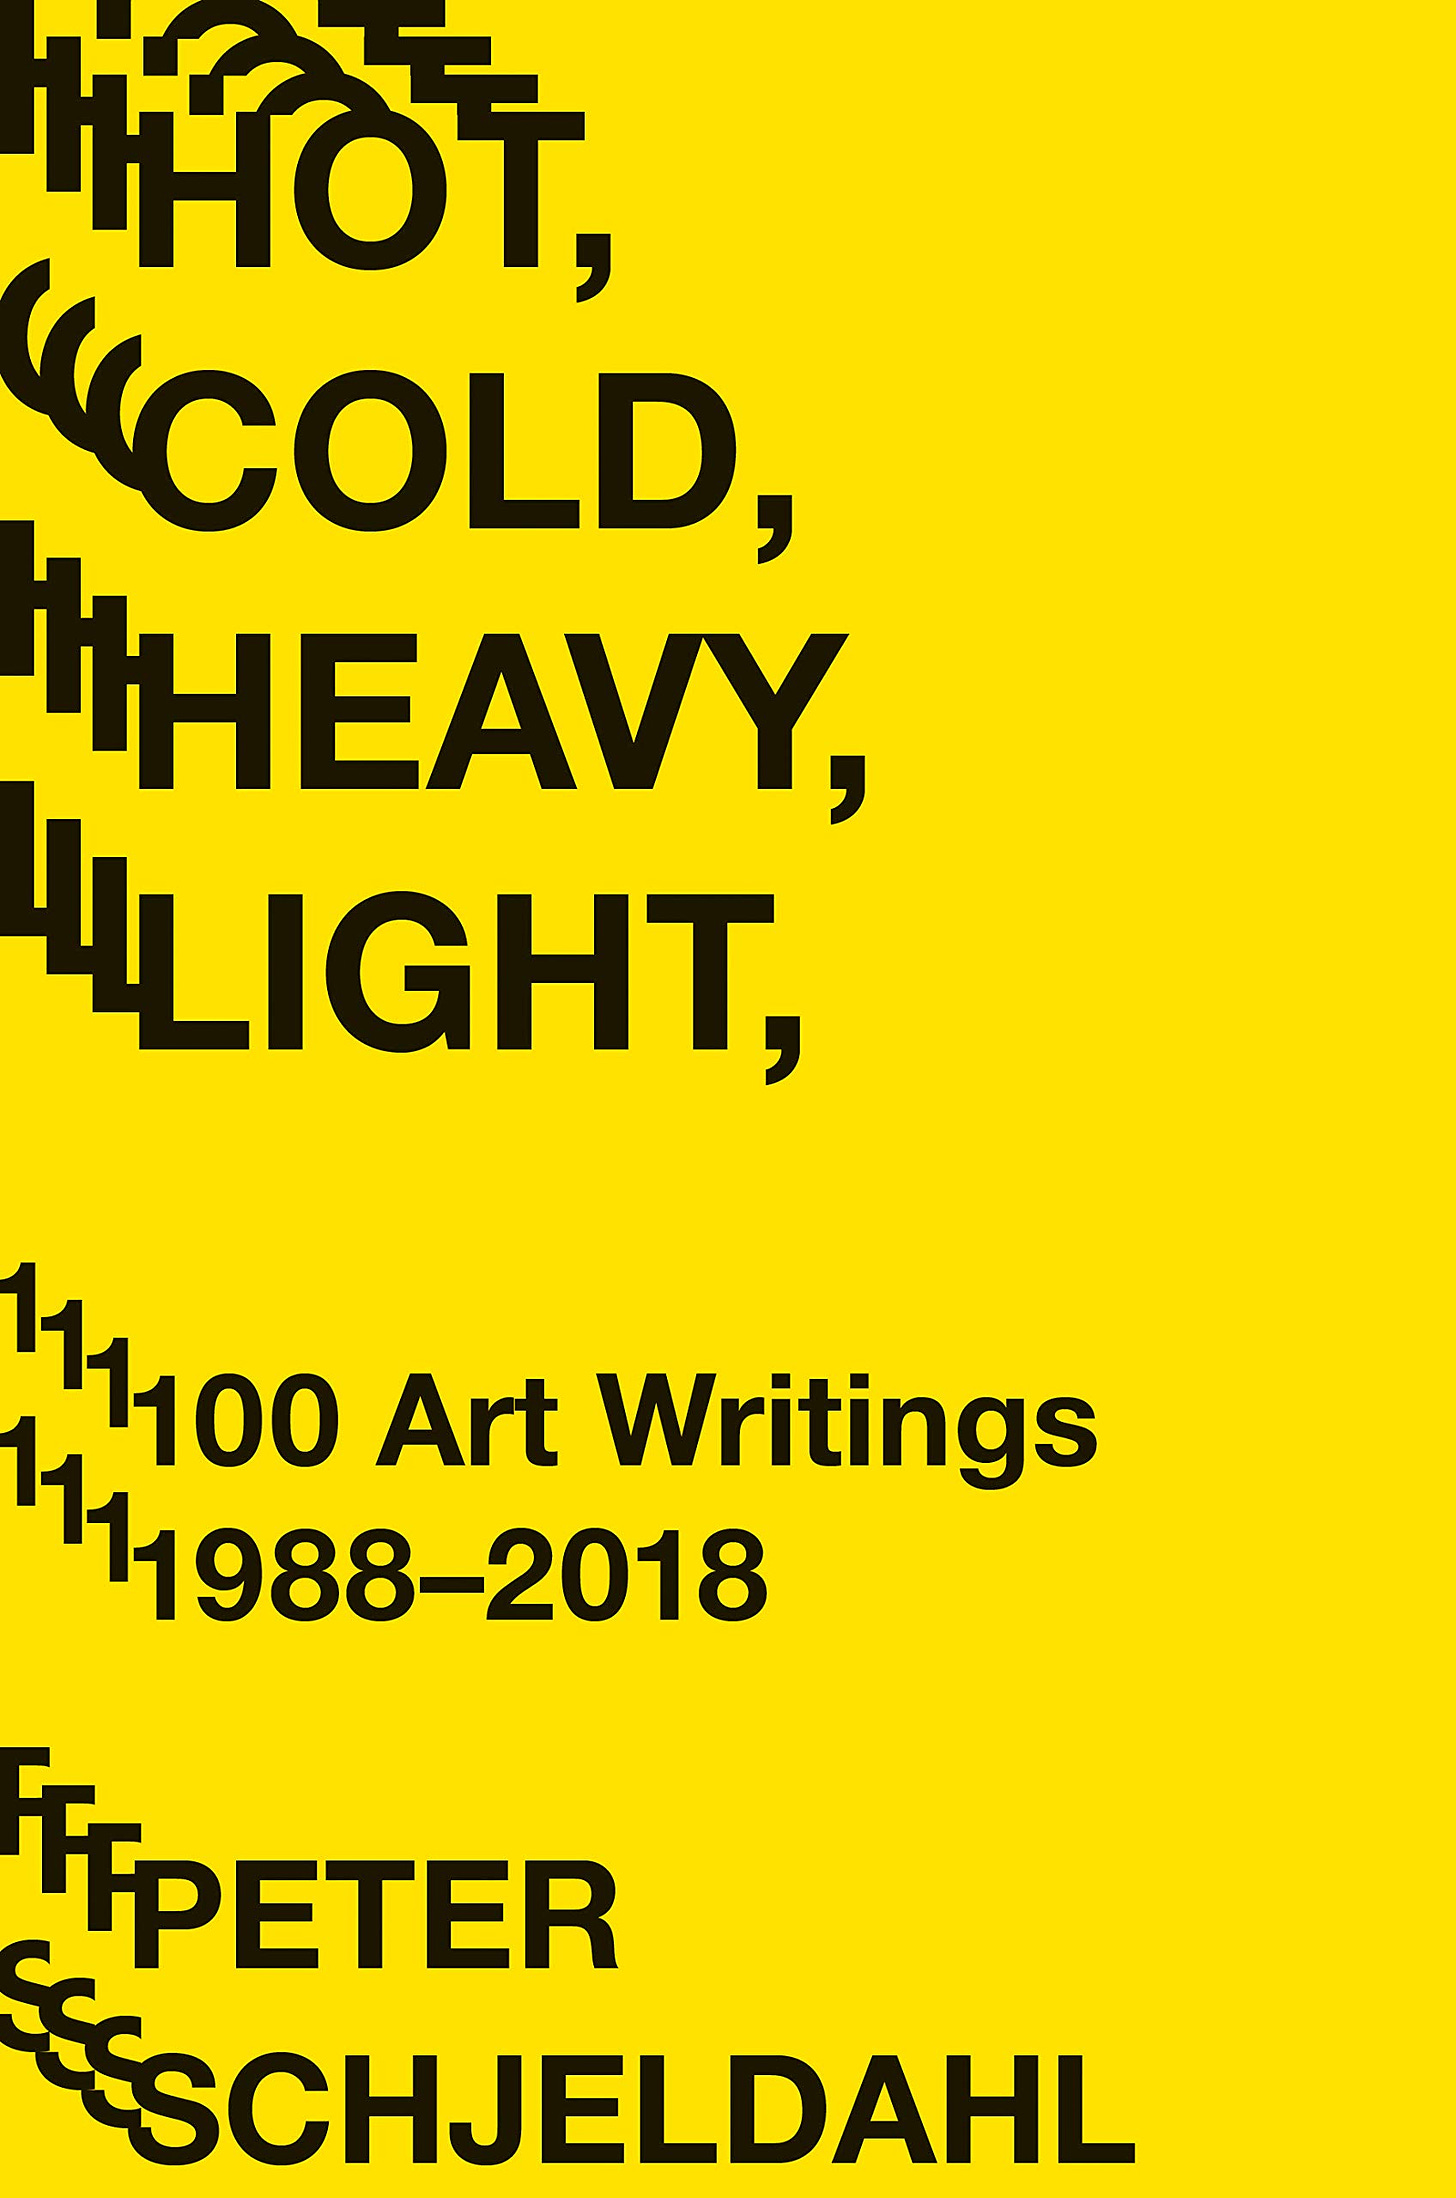 Hot, Cold, Heavy, Light, 100 Art Writings 1988-2018: Schjeldahl, Peter,  Earnest, Jarrett: 9781419734380: Amazon.com: Books